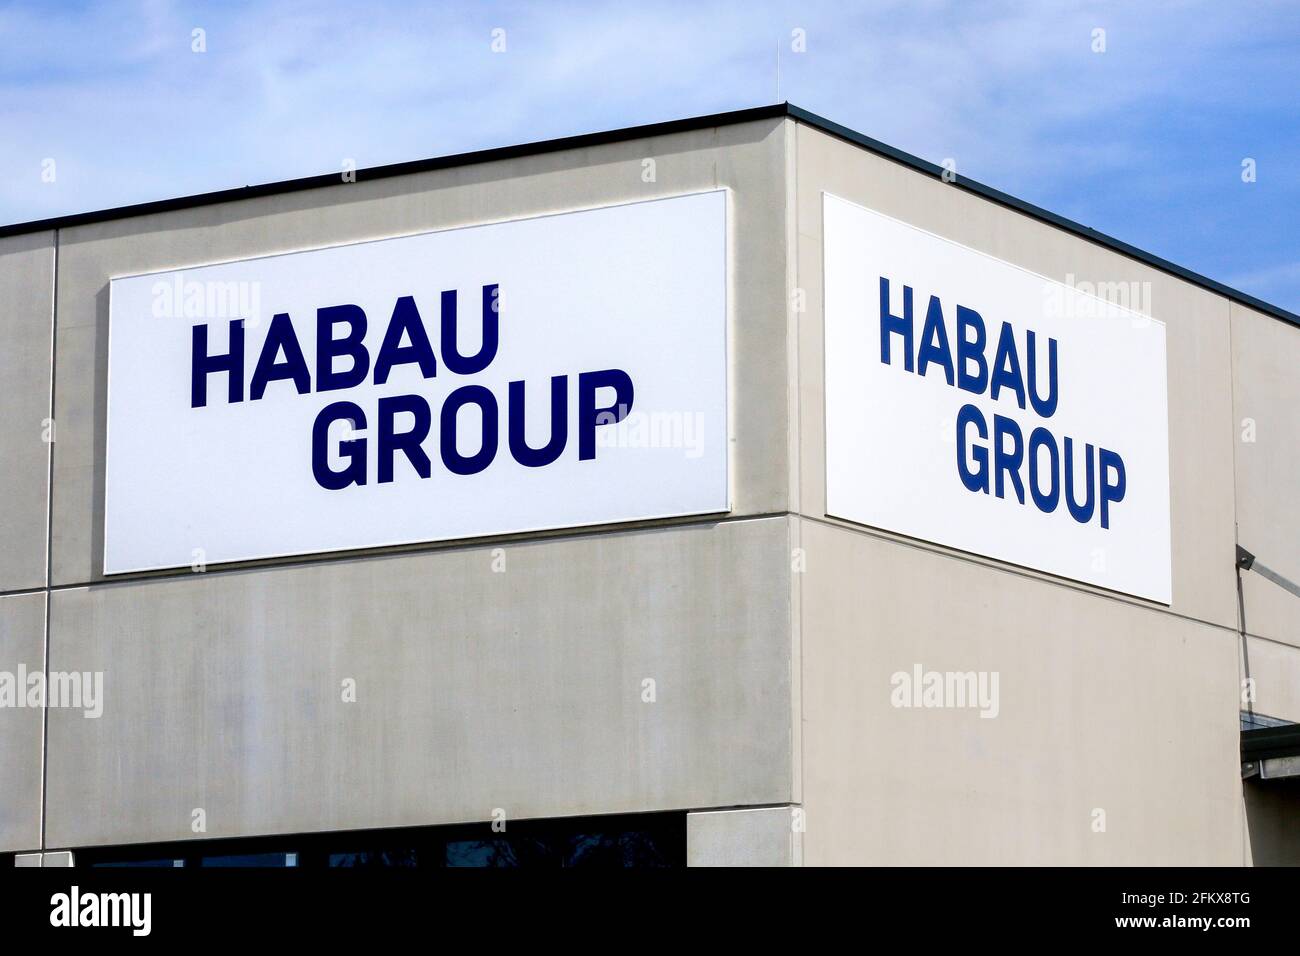 Habau Group, Held &amp; Francke, Horn NÖ, Austria Stock Photo